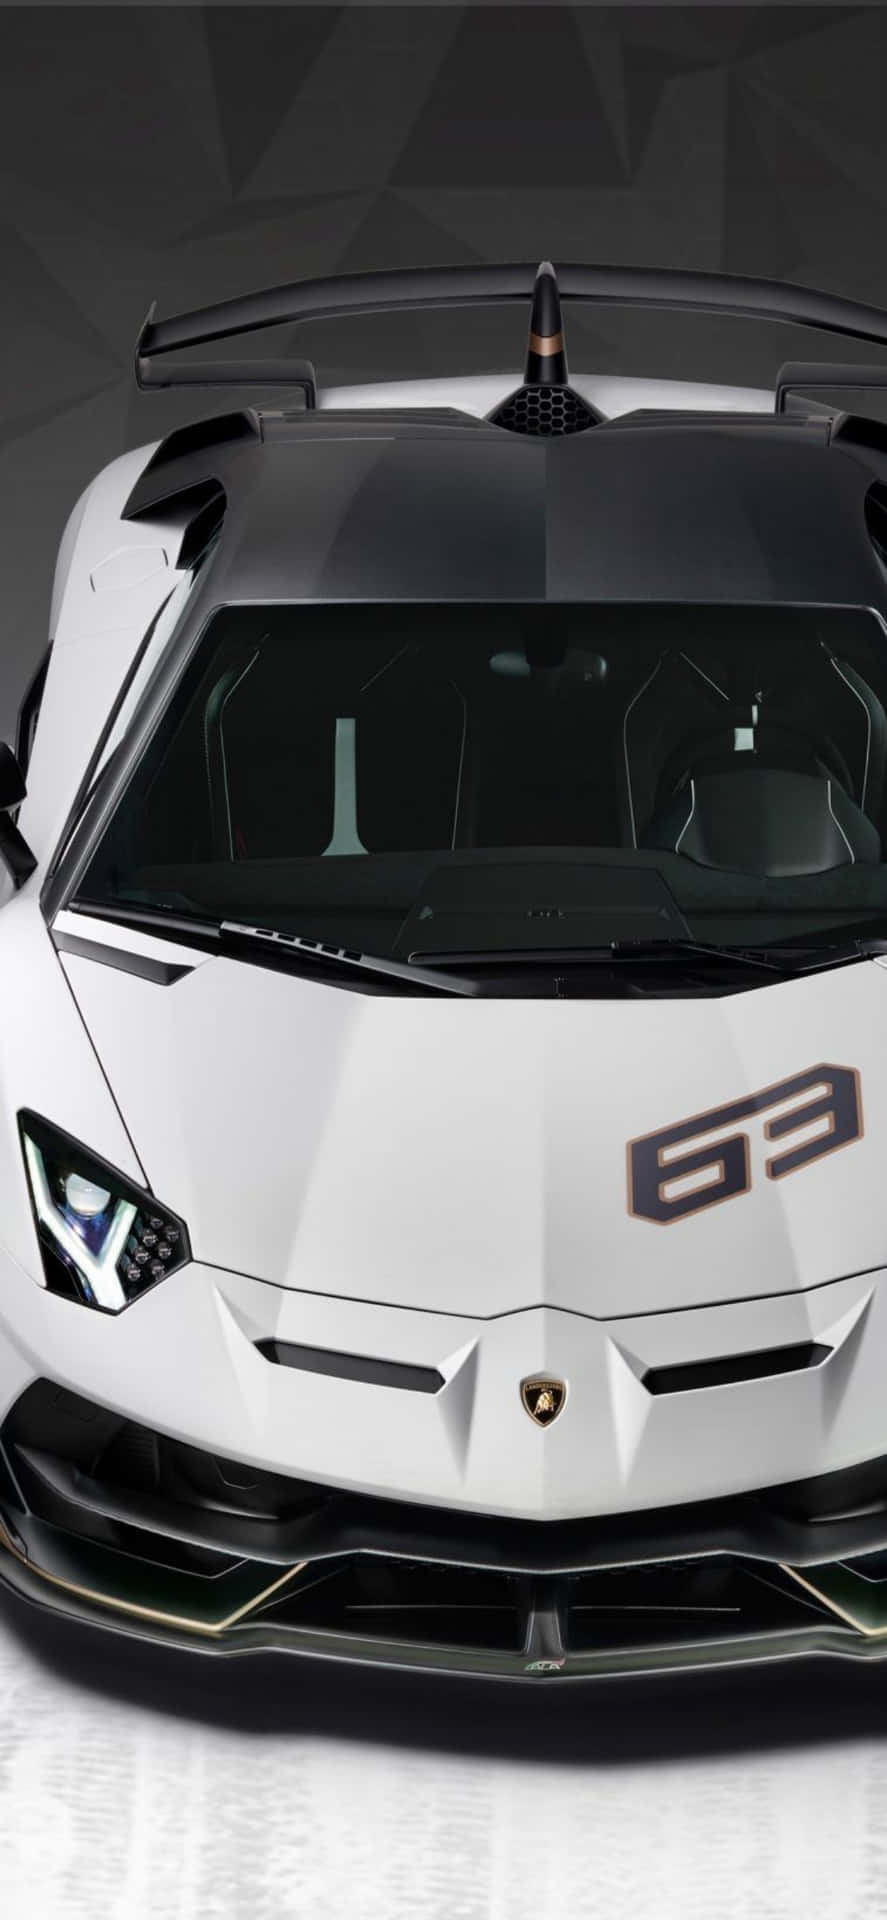 Luxury iPhone X Meets Luxury Lamborghini